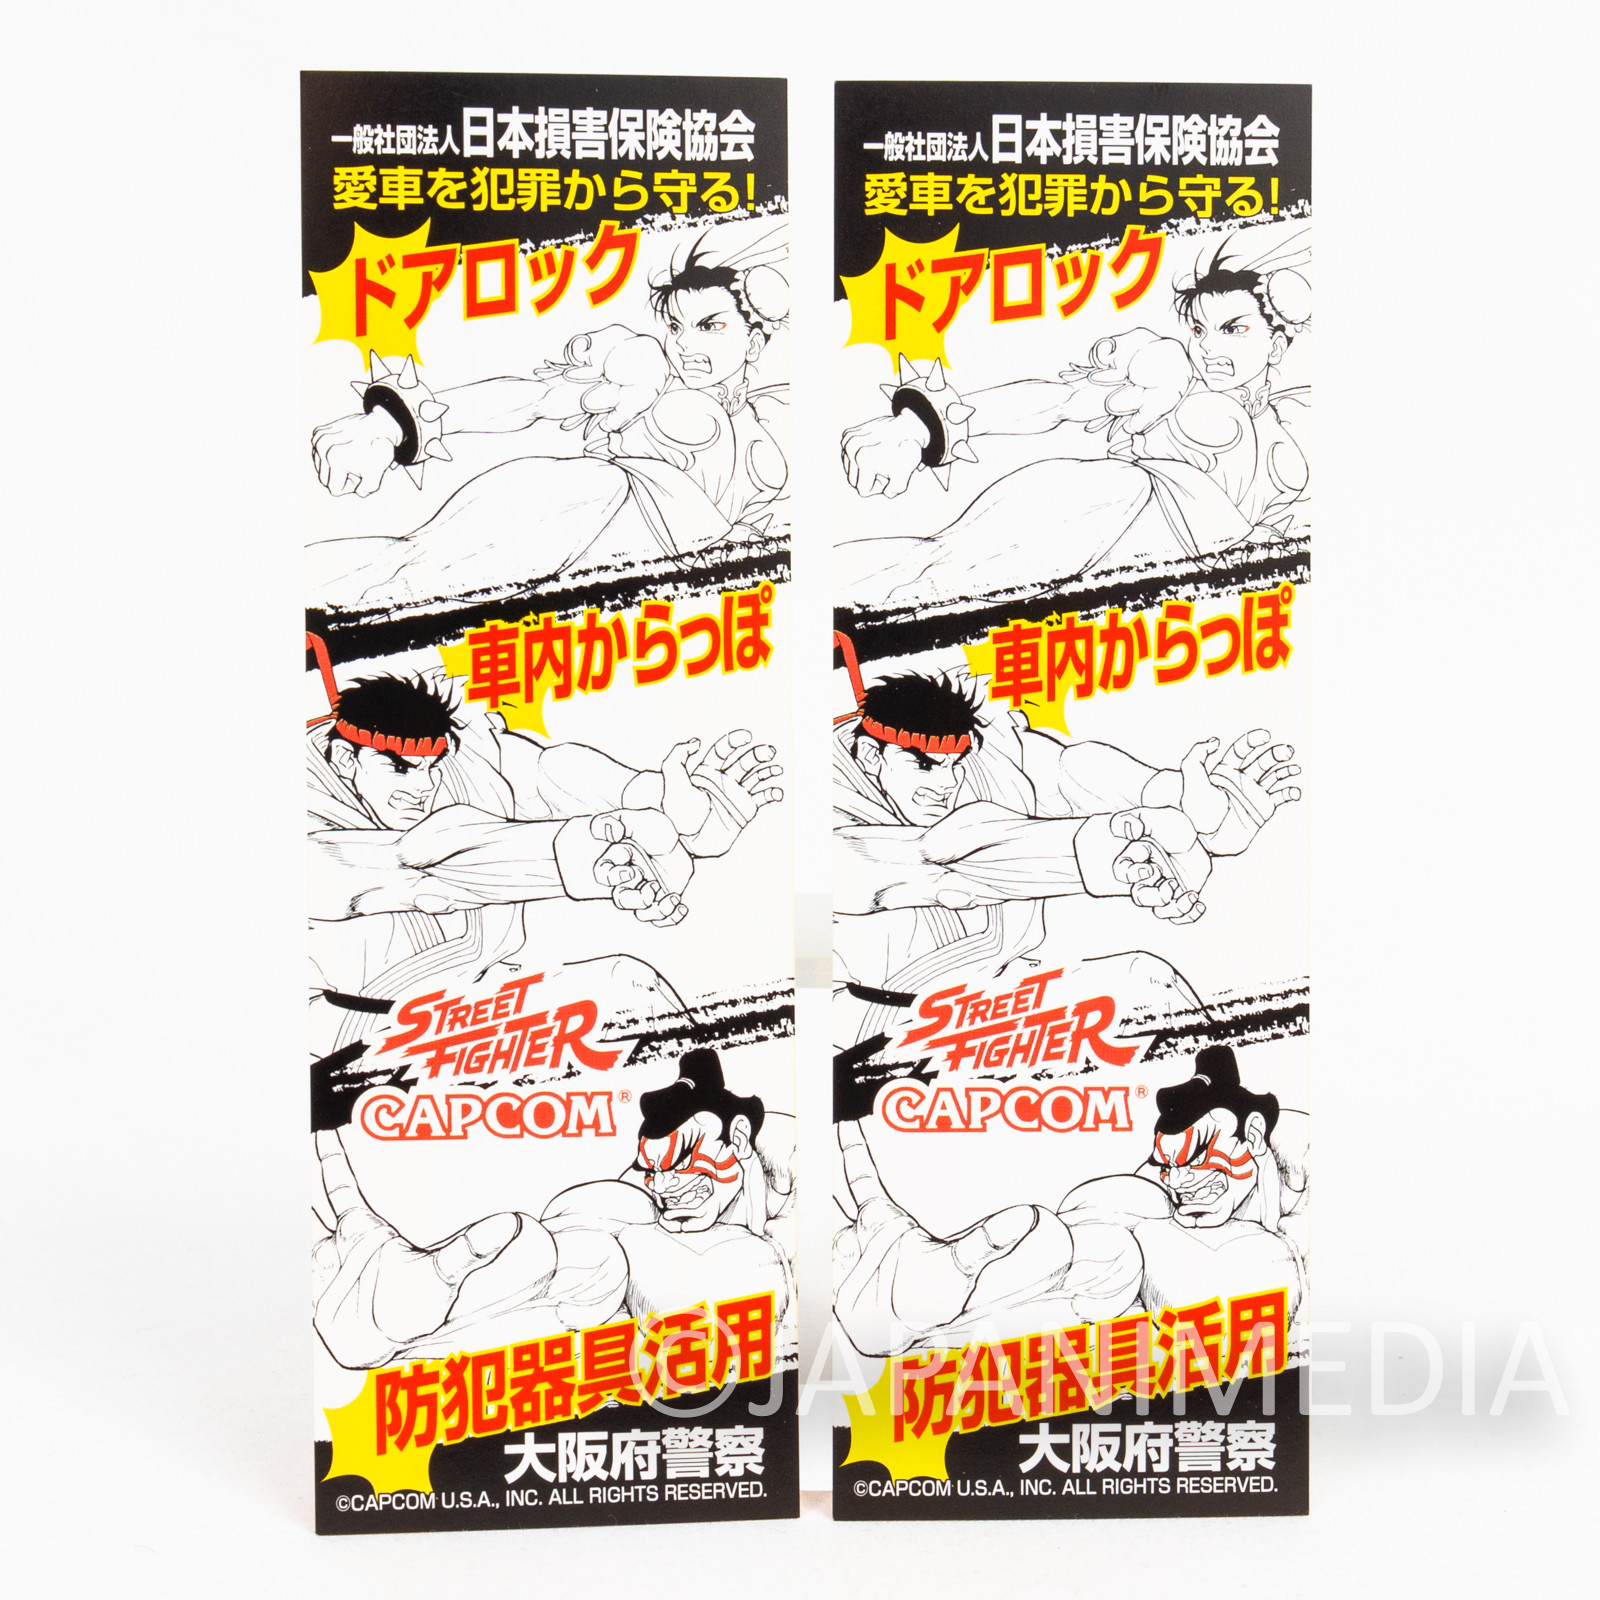 Street Fighter 2 x Osaka-fu Police Paper Bookmarker 2pc CAPCOM